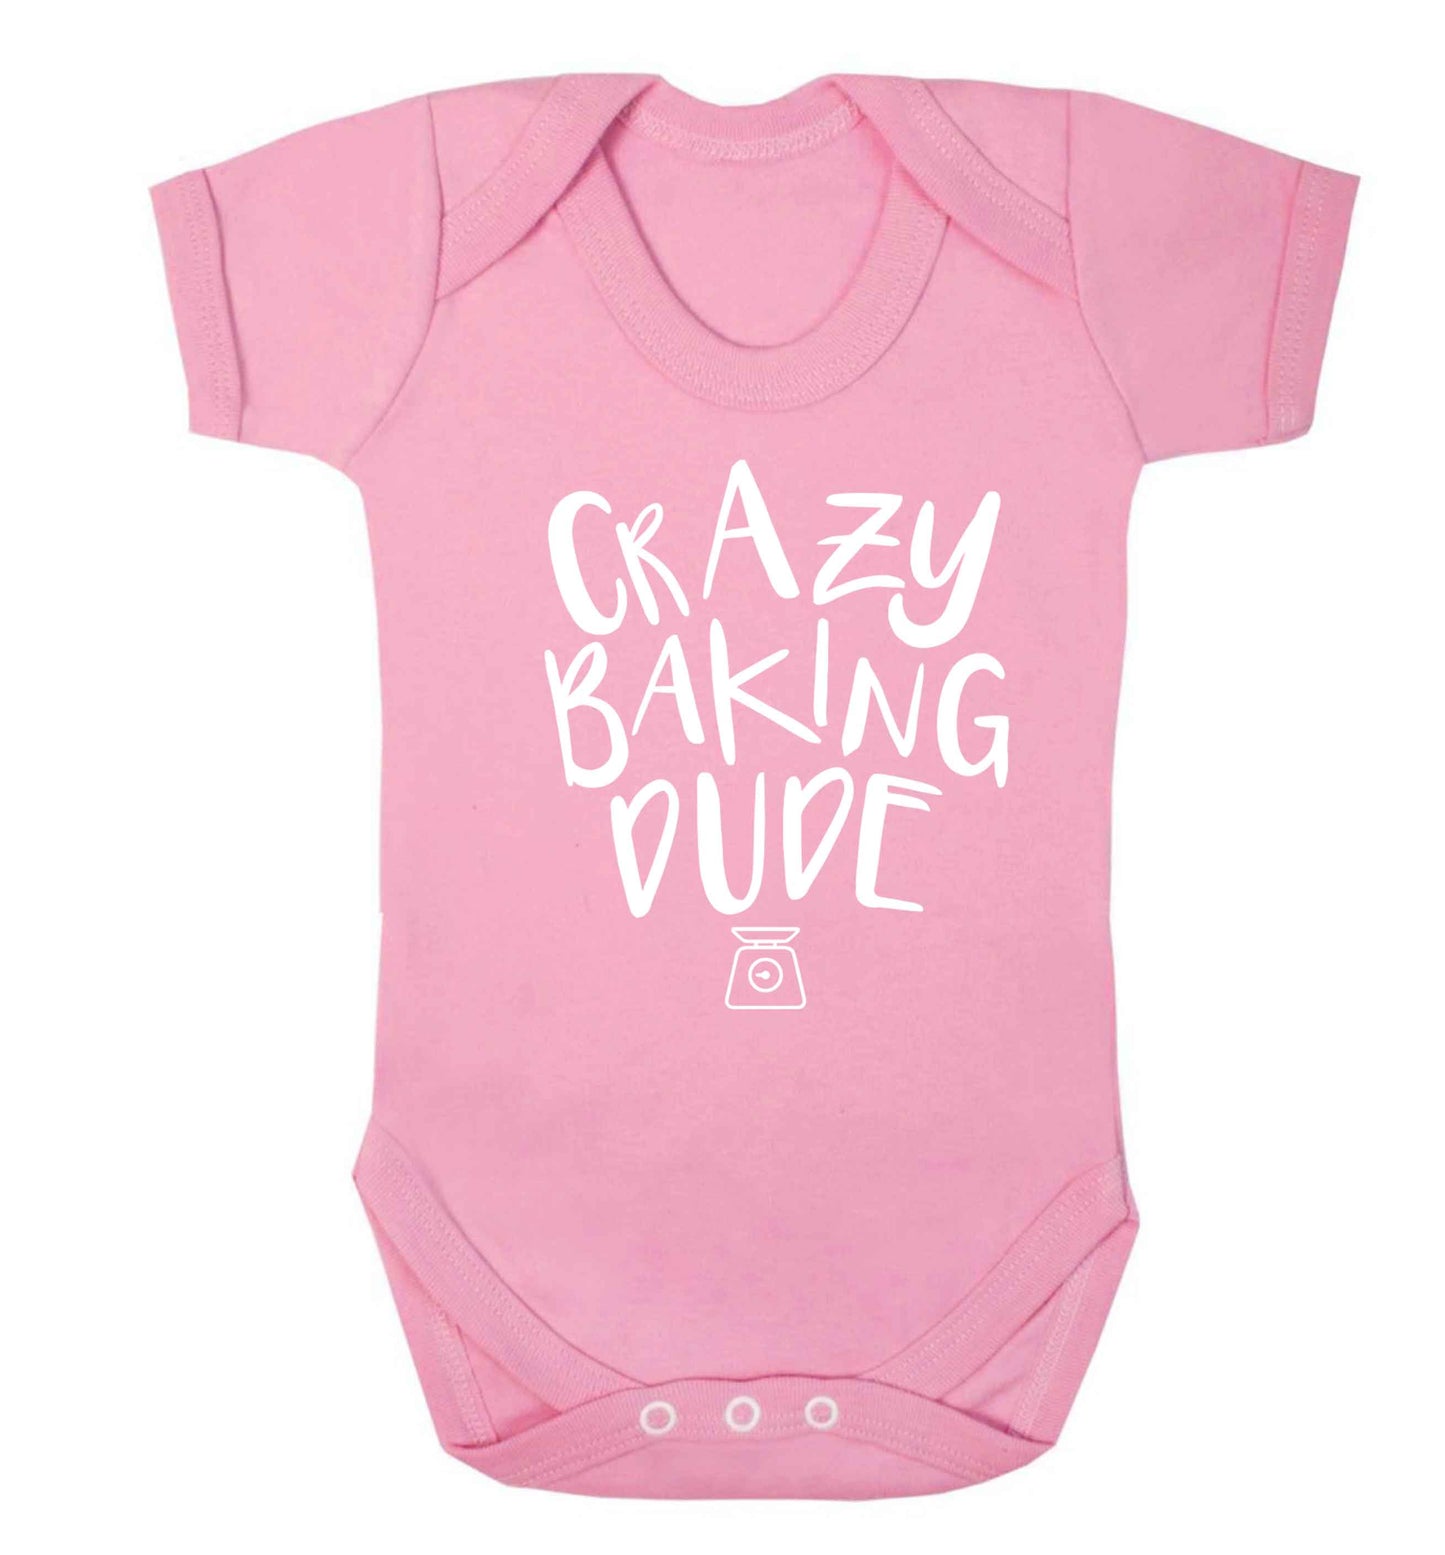 Crazy baking dude Baby Vest pale pink 18-24 months